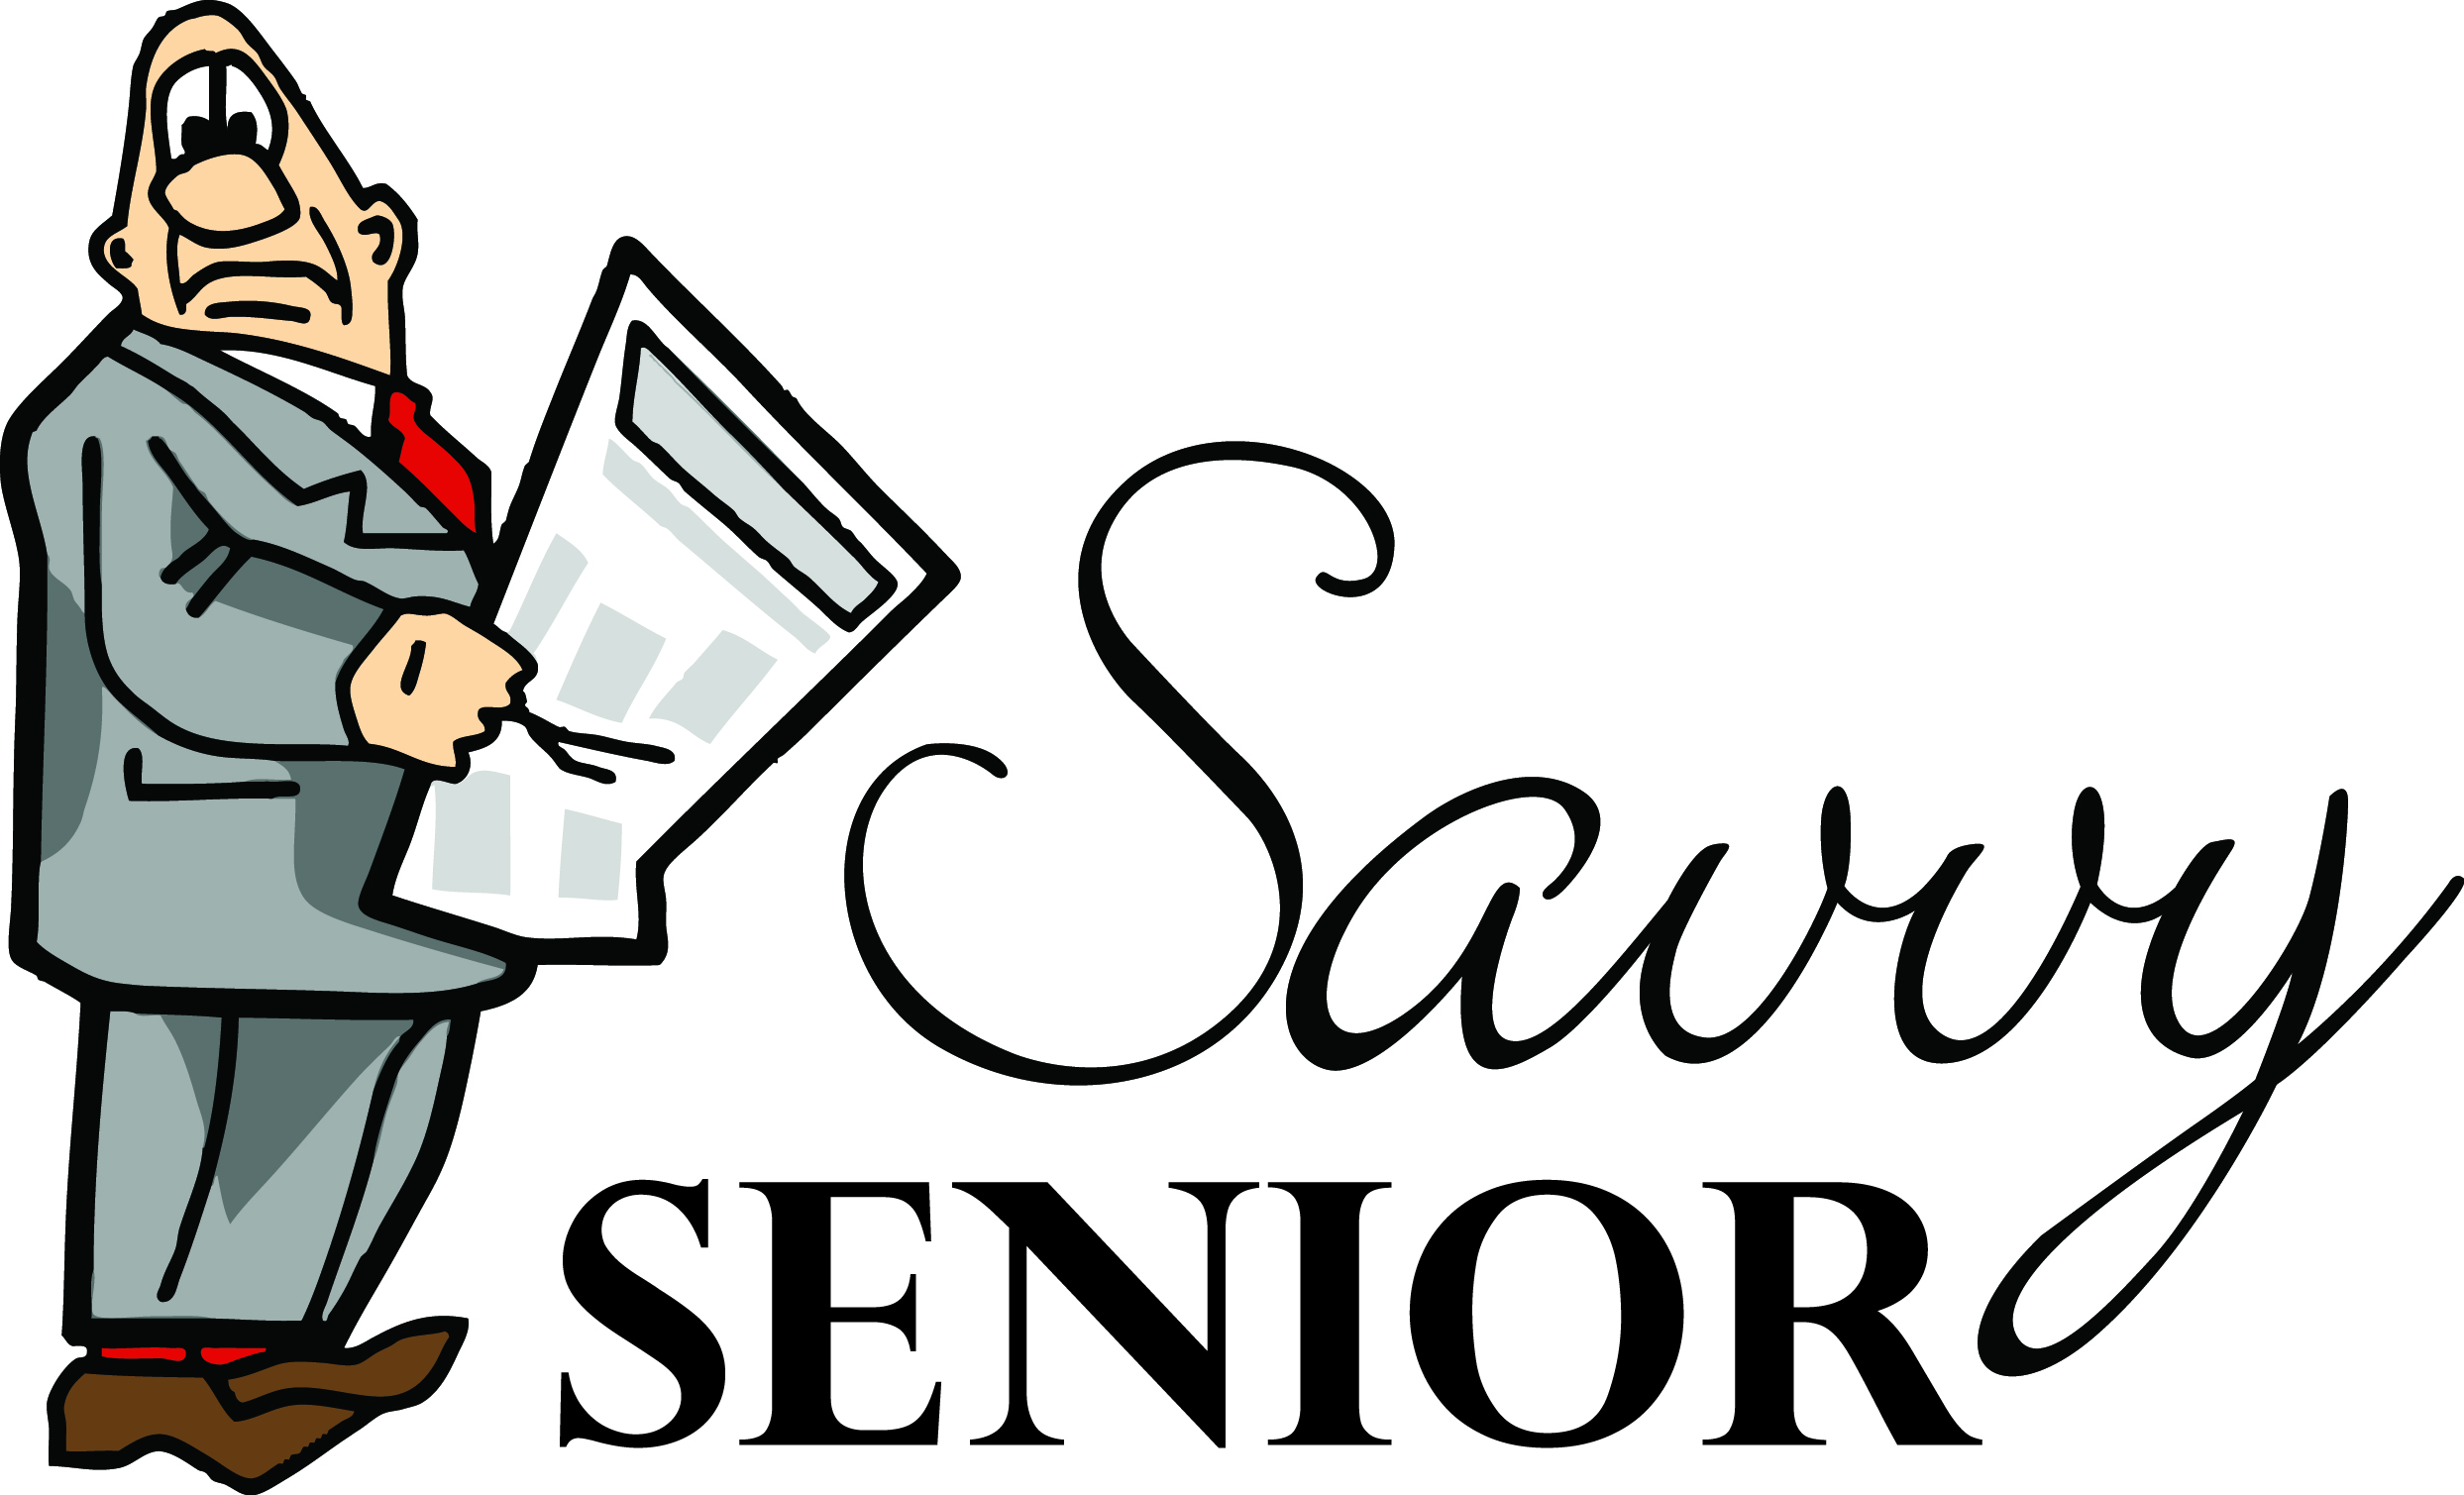 Savvy Senior: Little known property-tax relief programs help seniors save